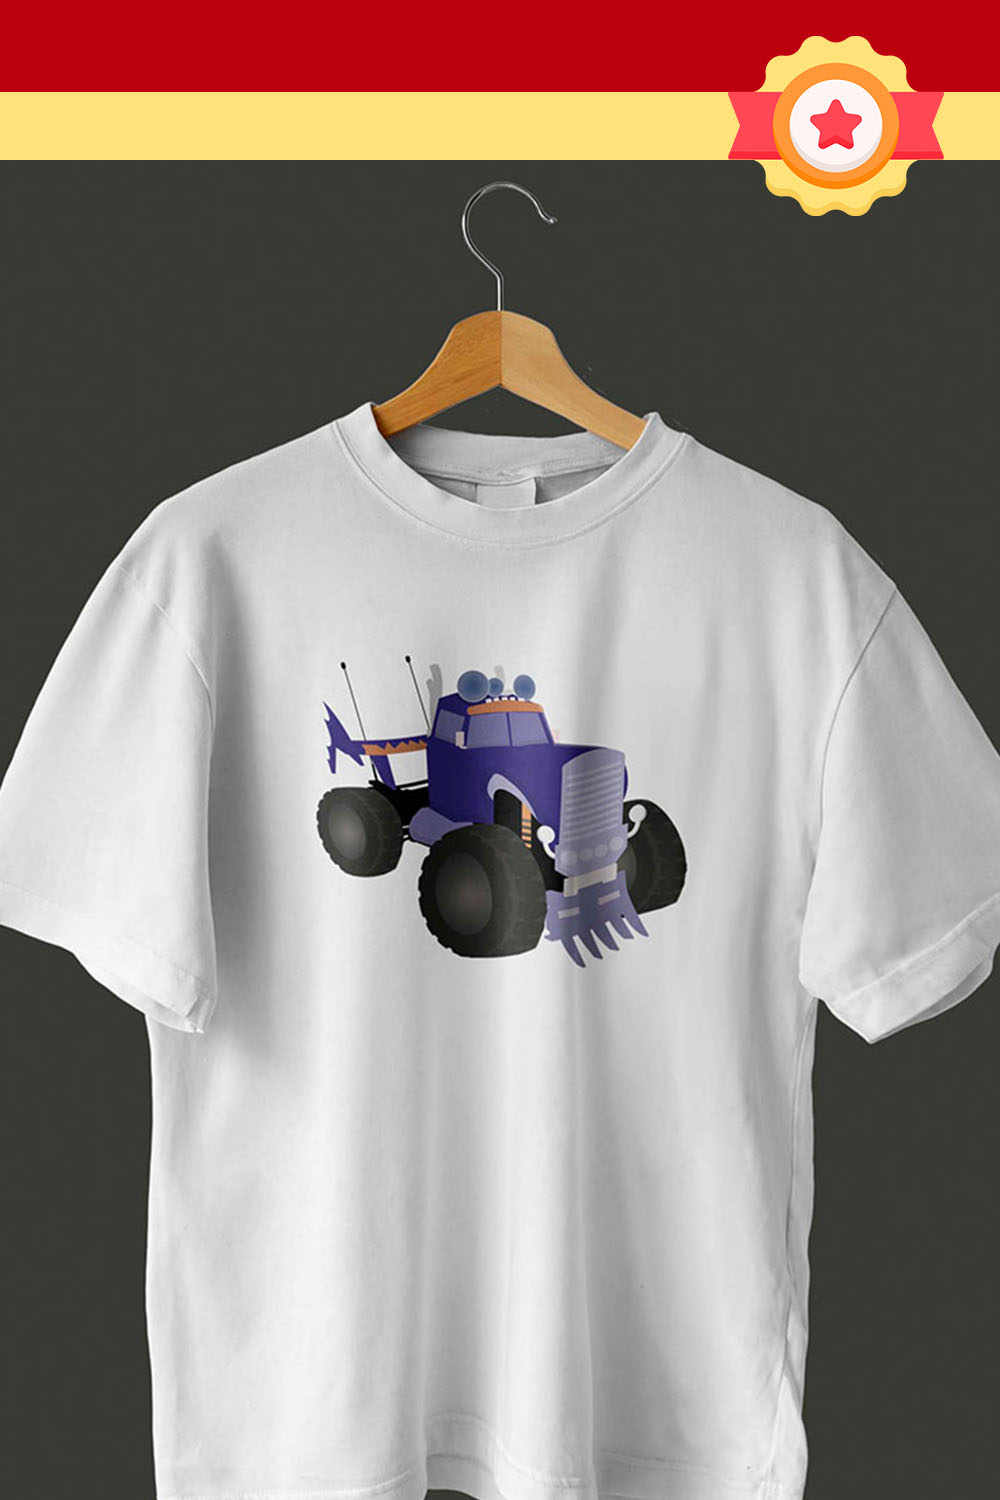 Construct Car T-shirt Design Pinterest image.